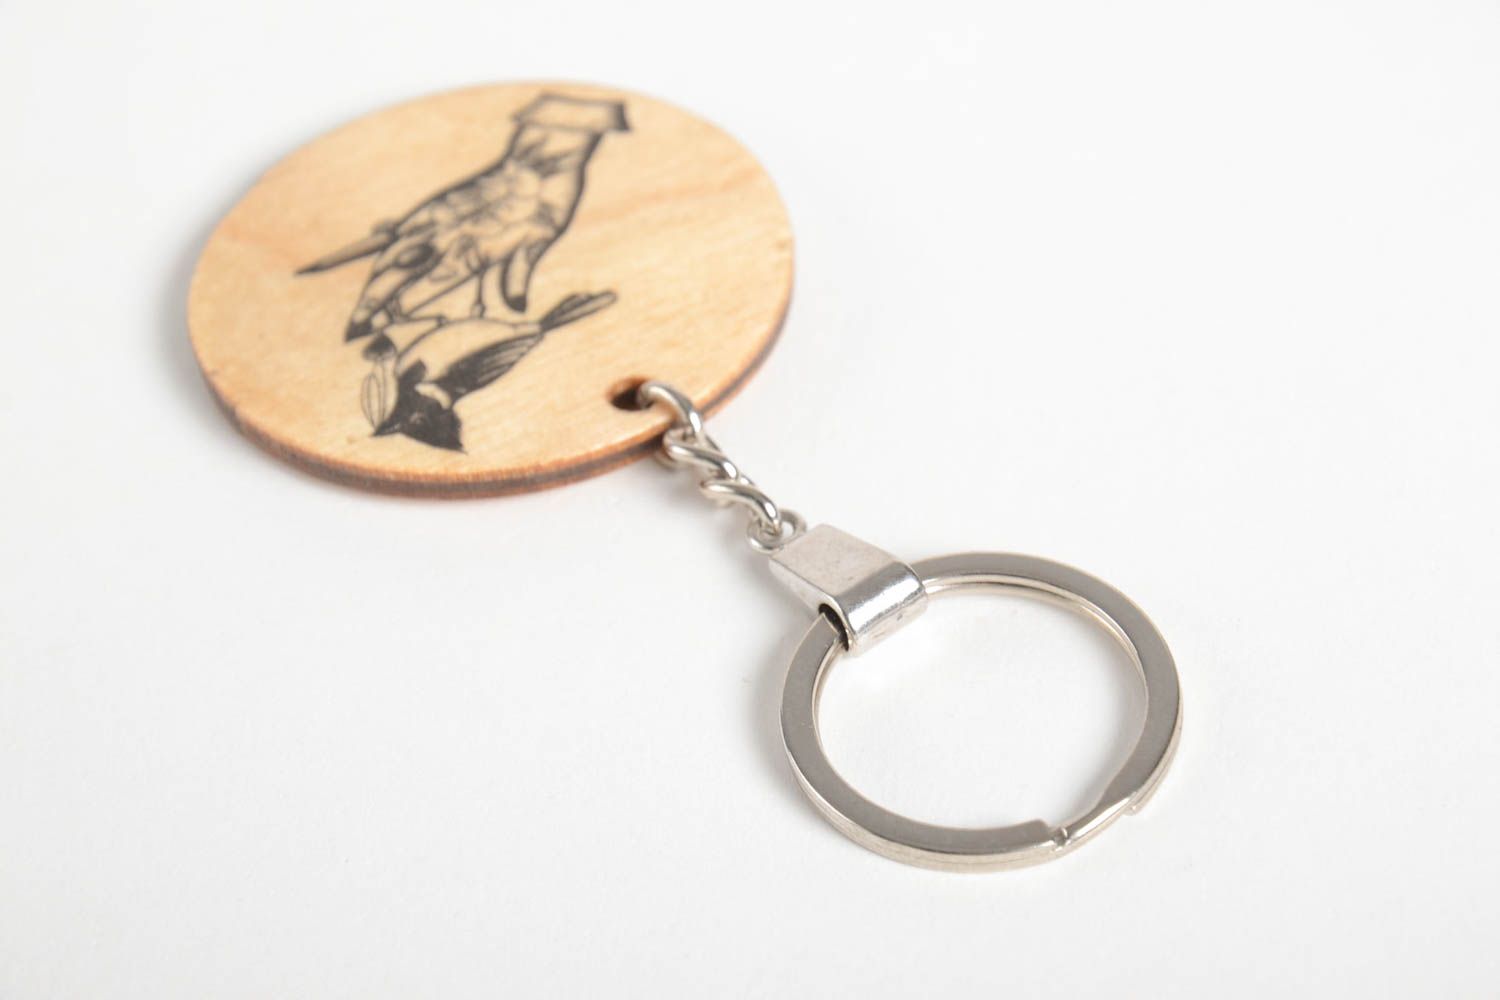 Handmade keychain unusual souvenir gift ideas wooden keychain for men photo 4